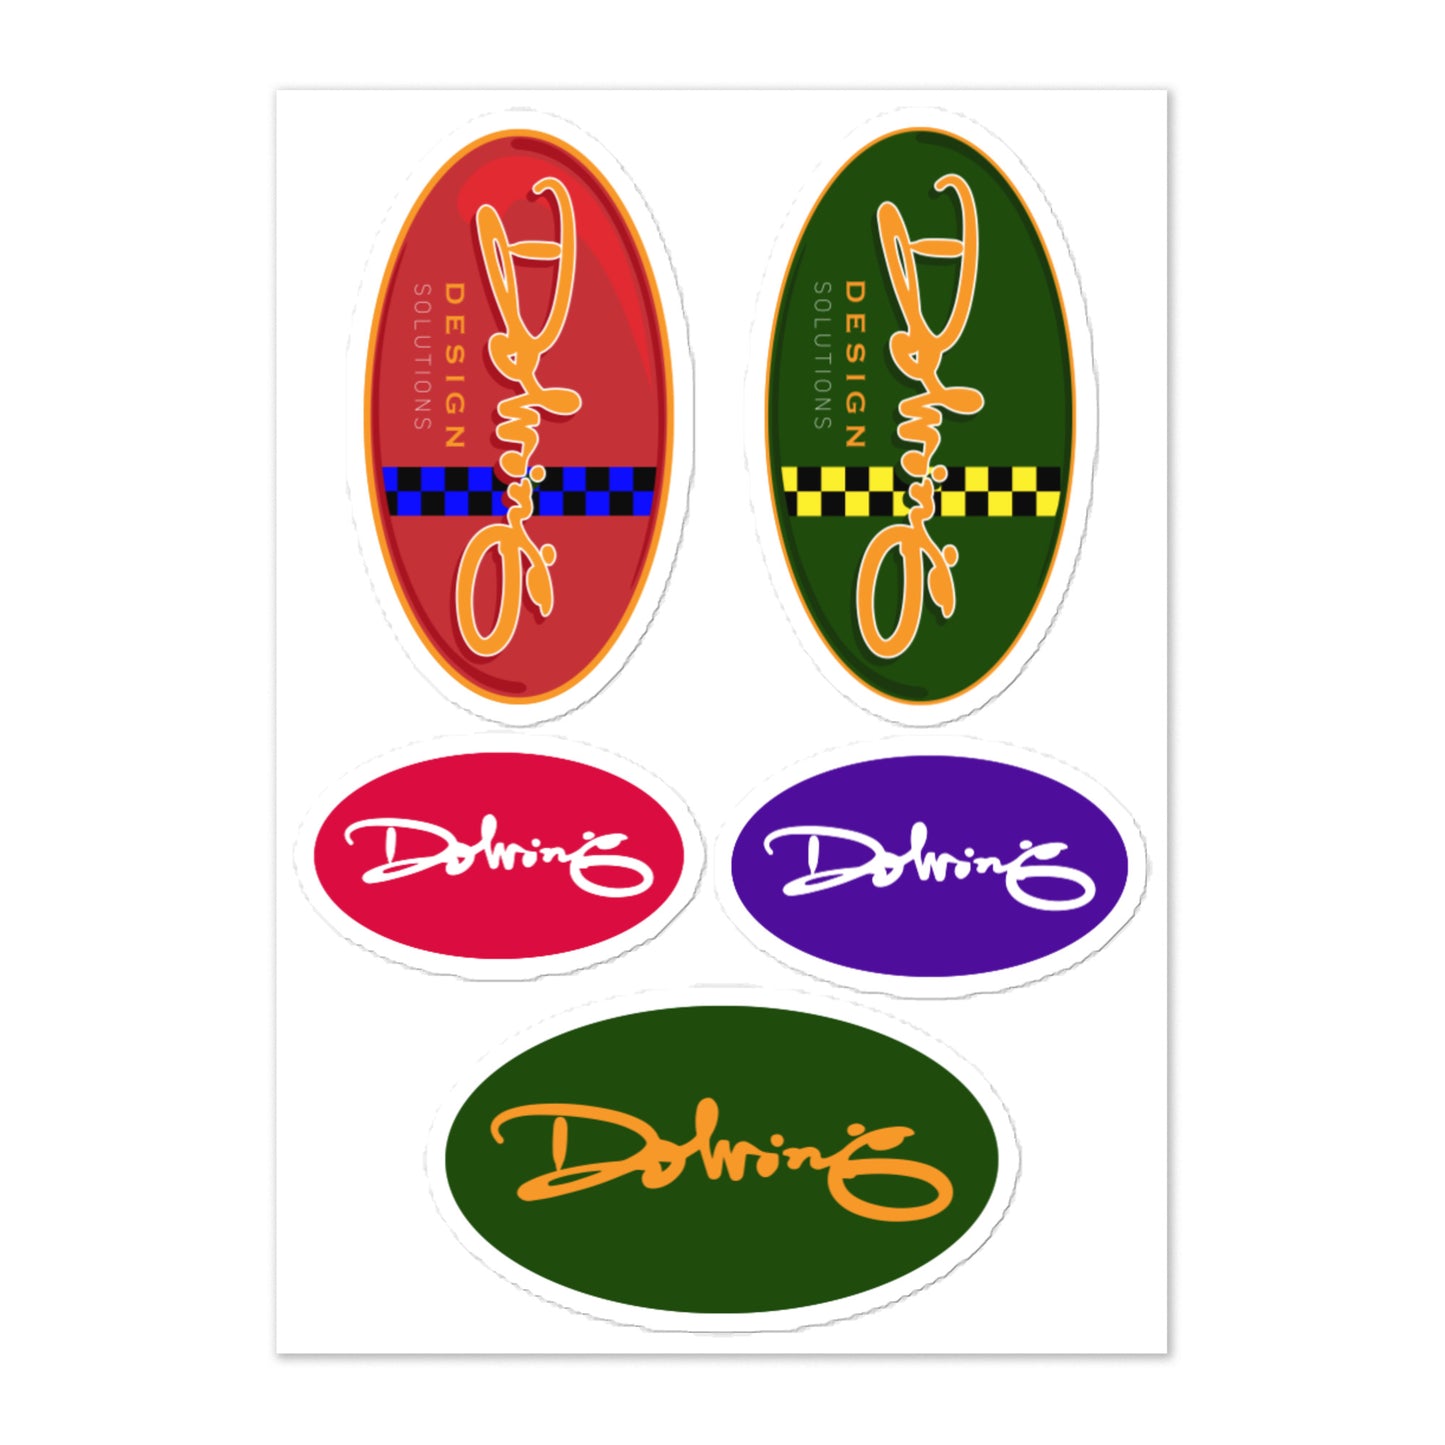 DOLVING logo - Mixed sticker sheet